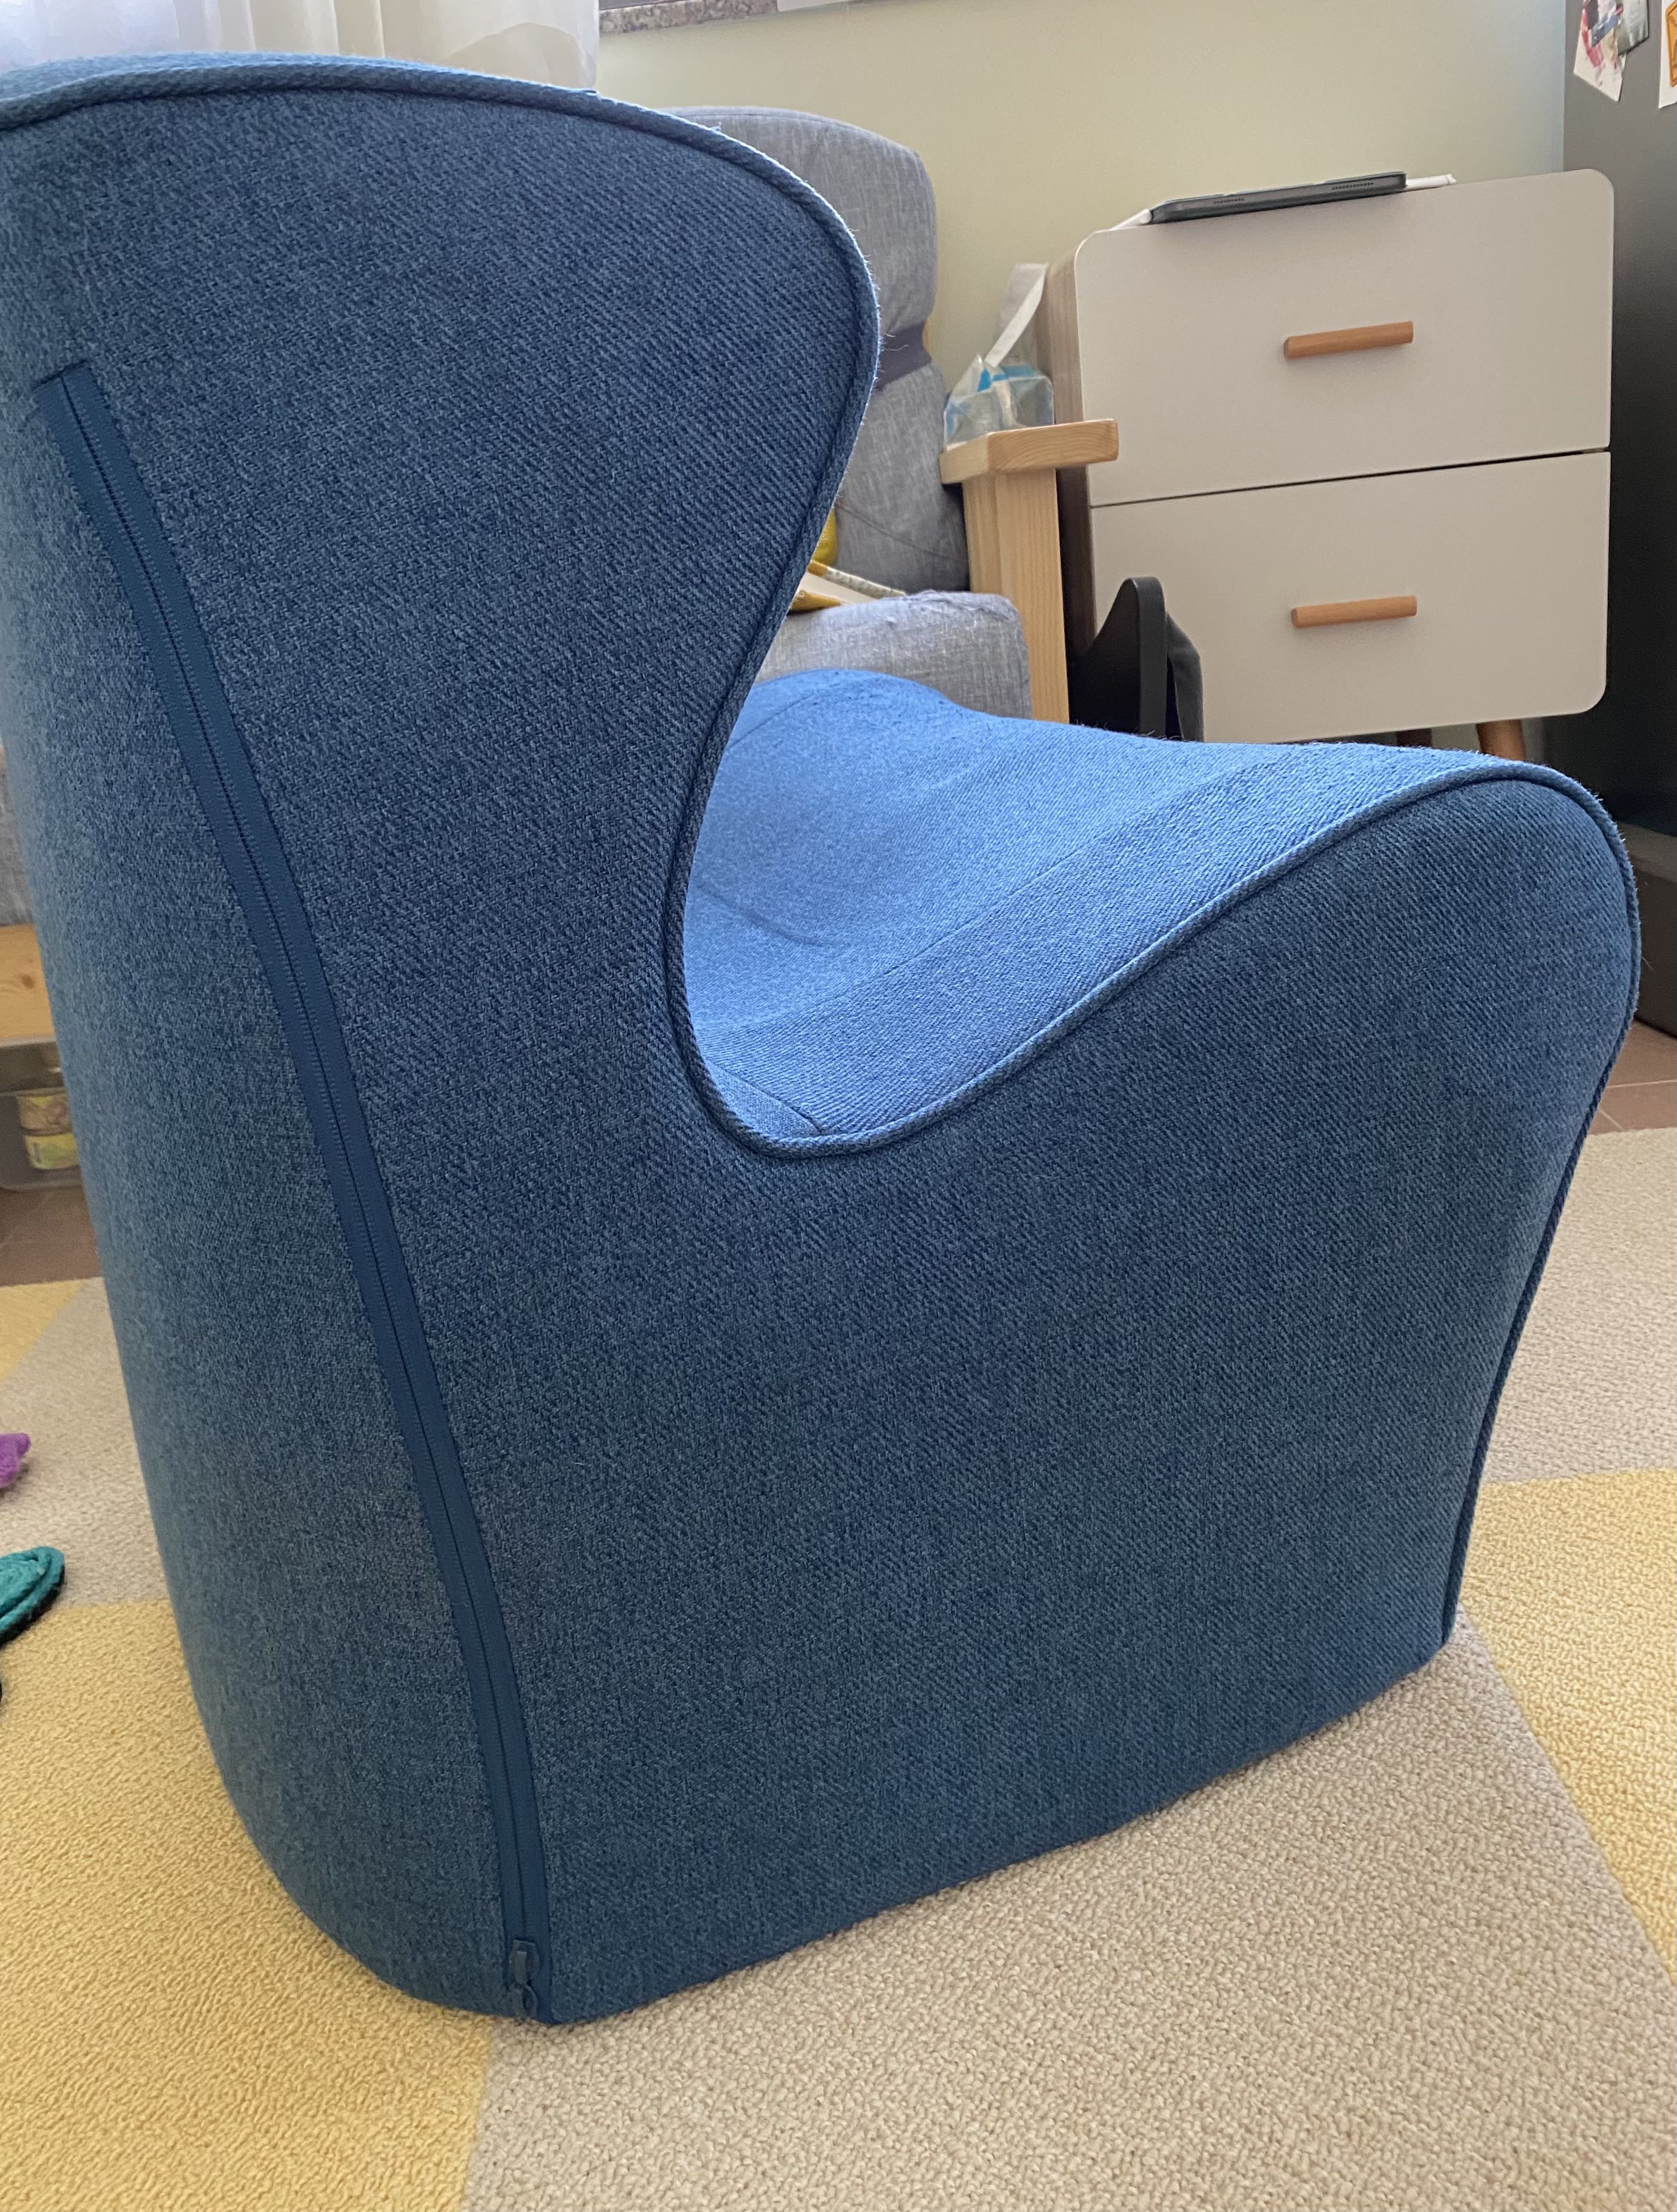 Style Dr. Chair Plus blue 梳化(原價$3600）, 兒童＆孕婦用品, 兒童